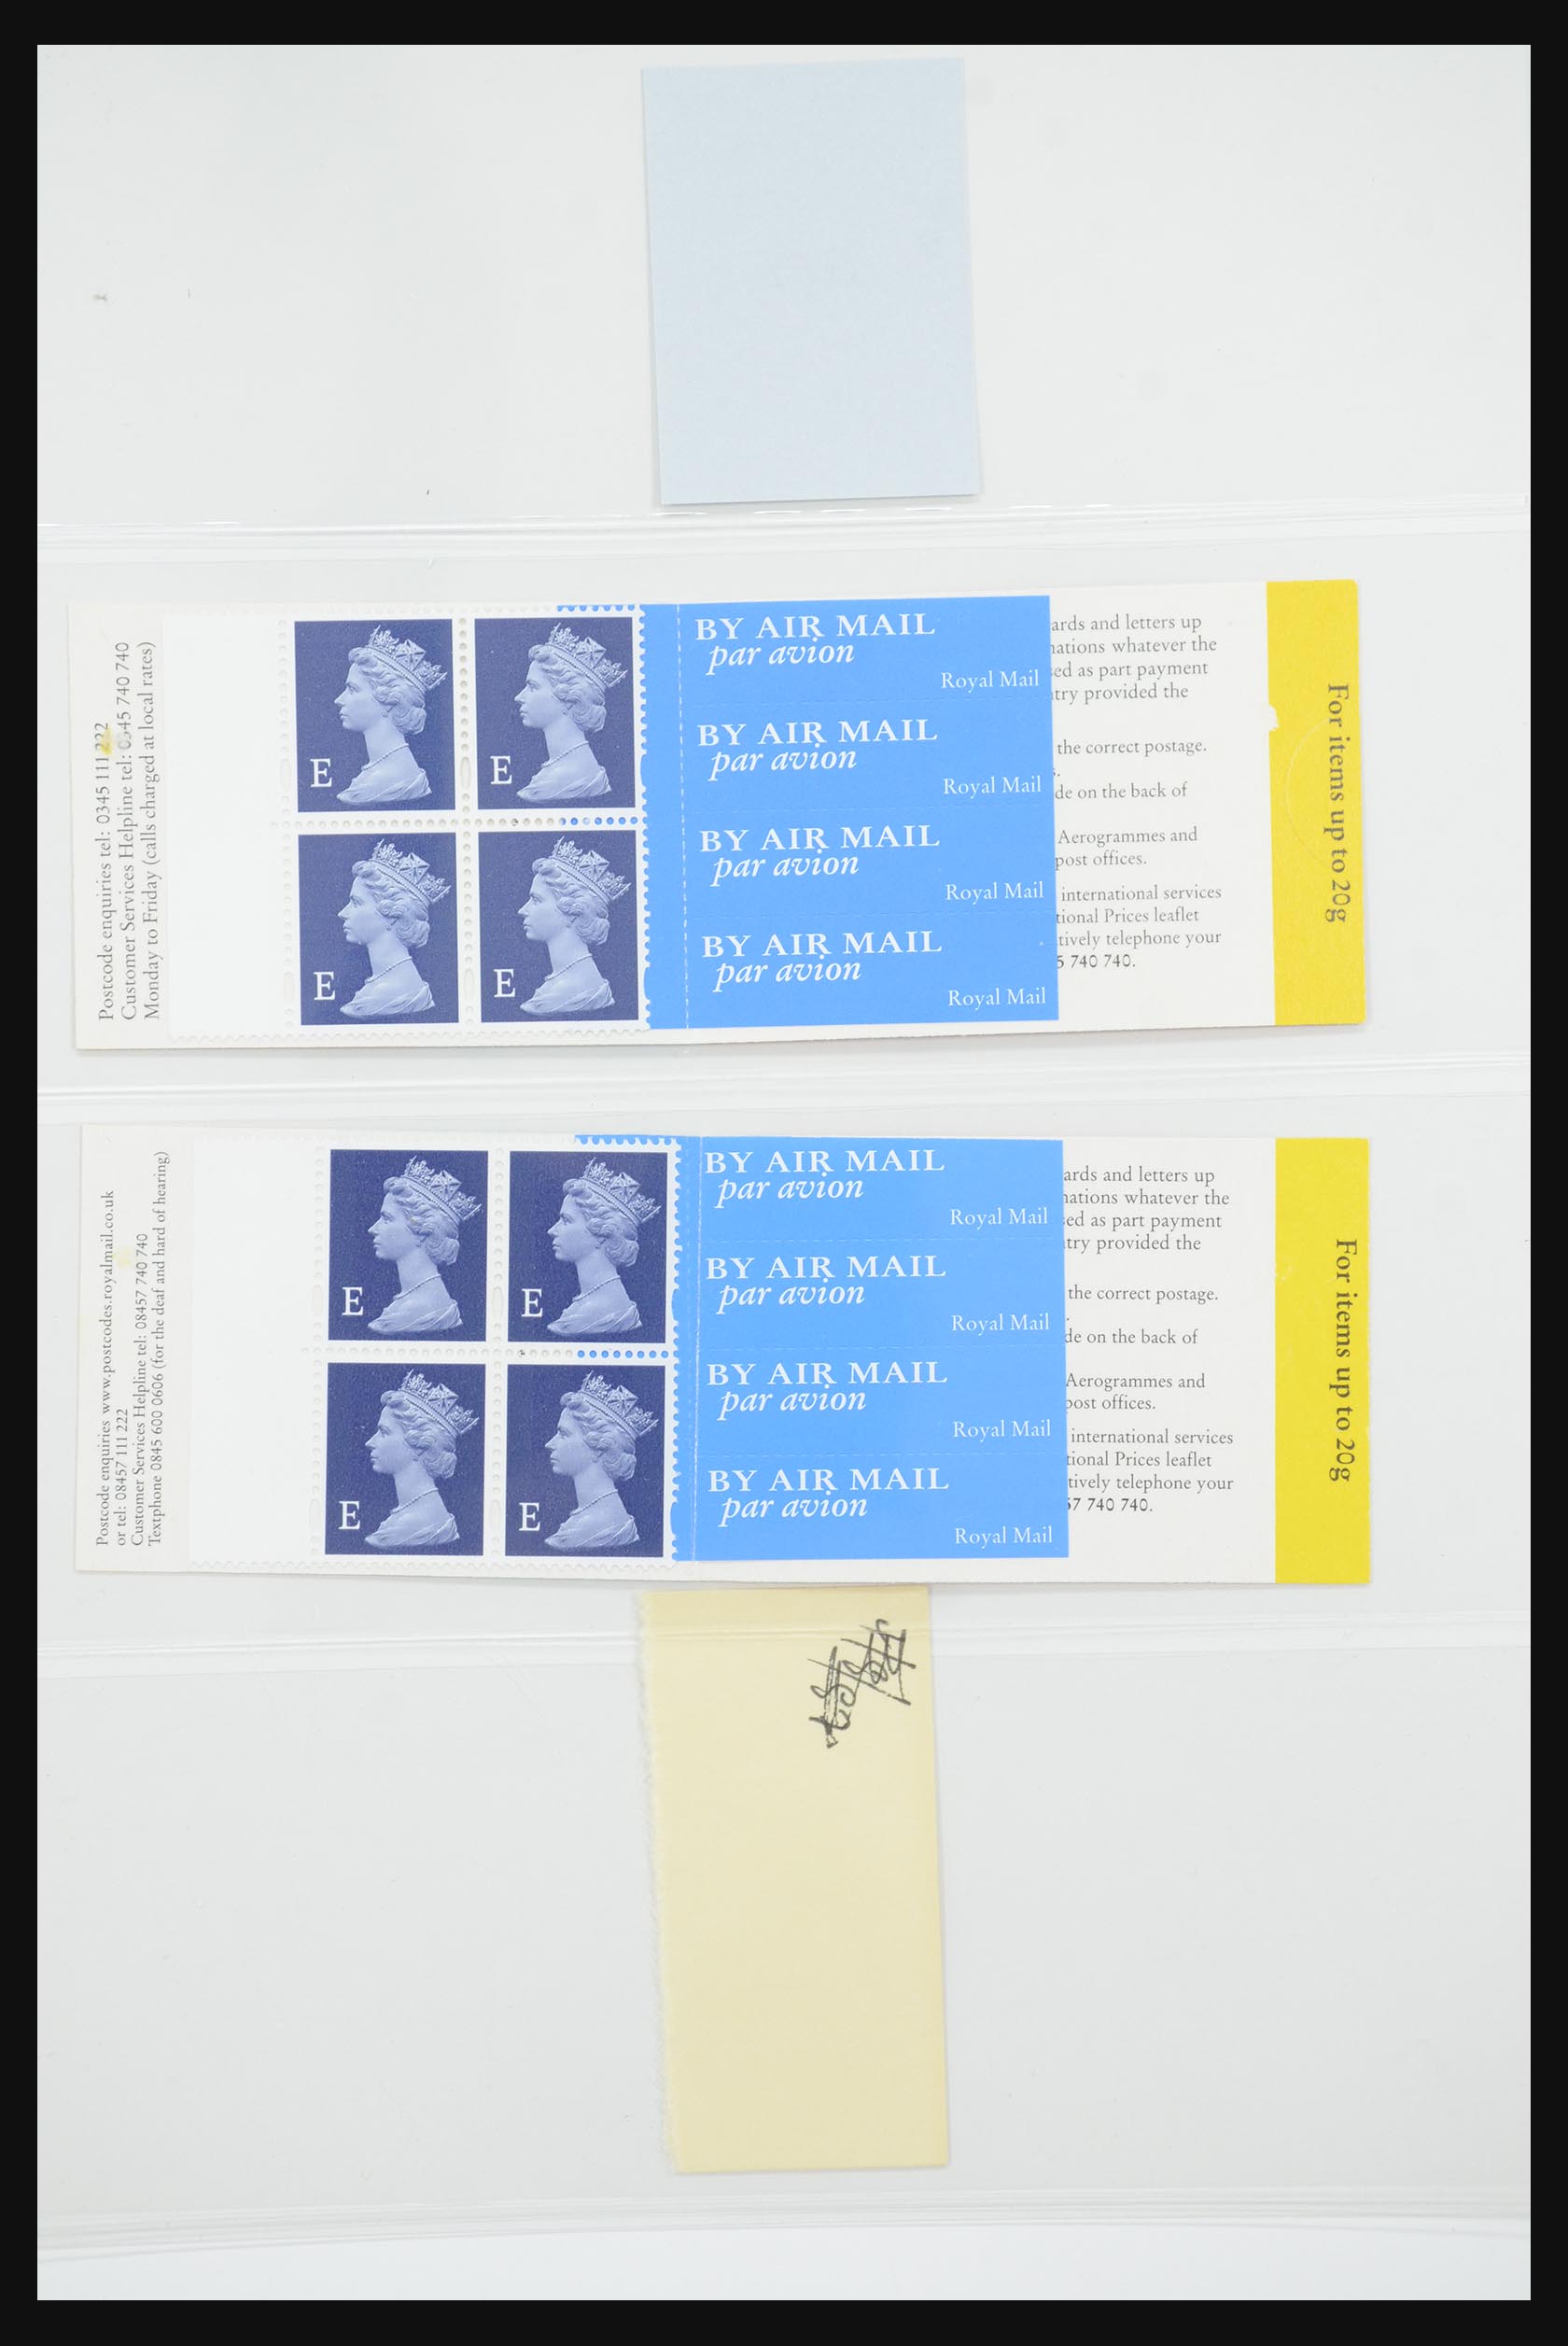 31960 178 - 31960 Great Britain stampbooklets 1989-2000.